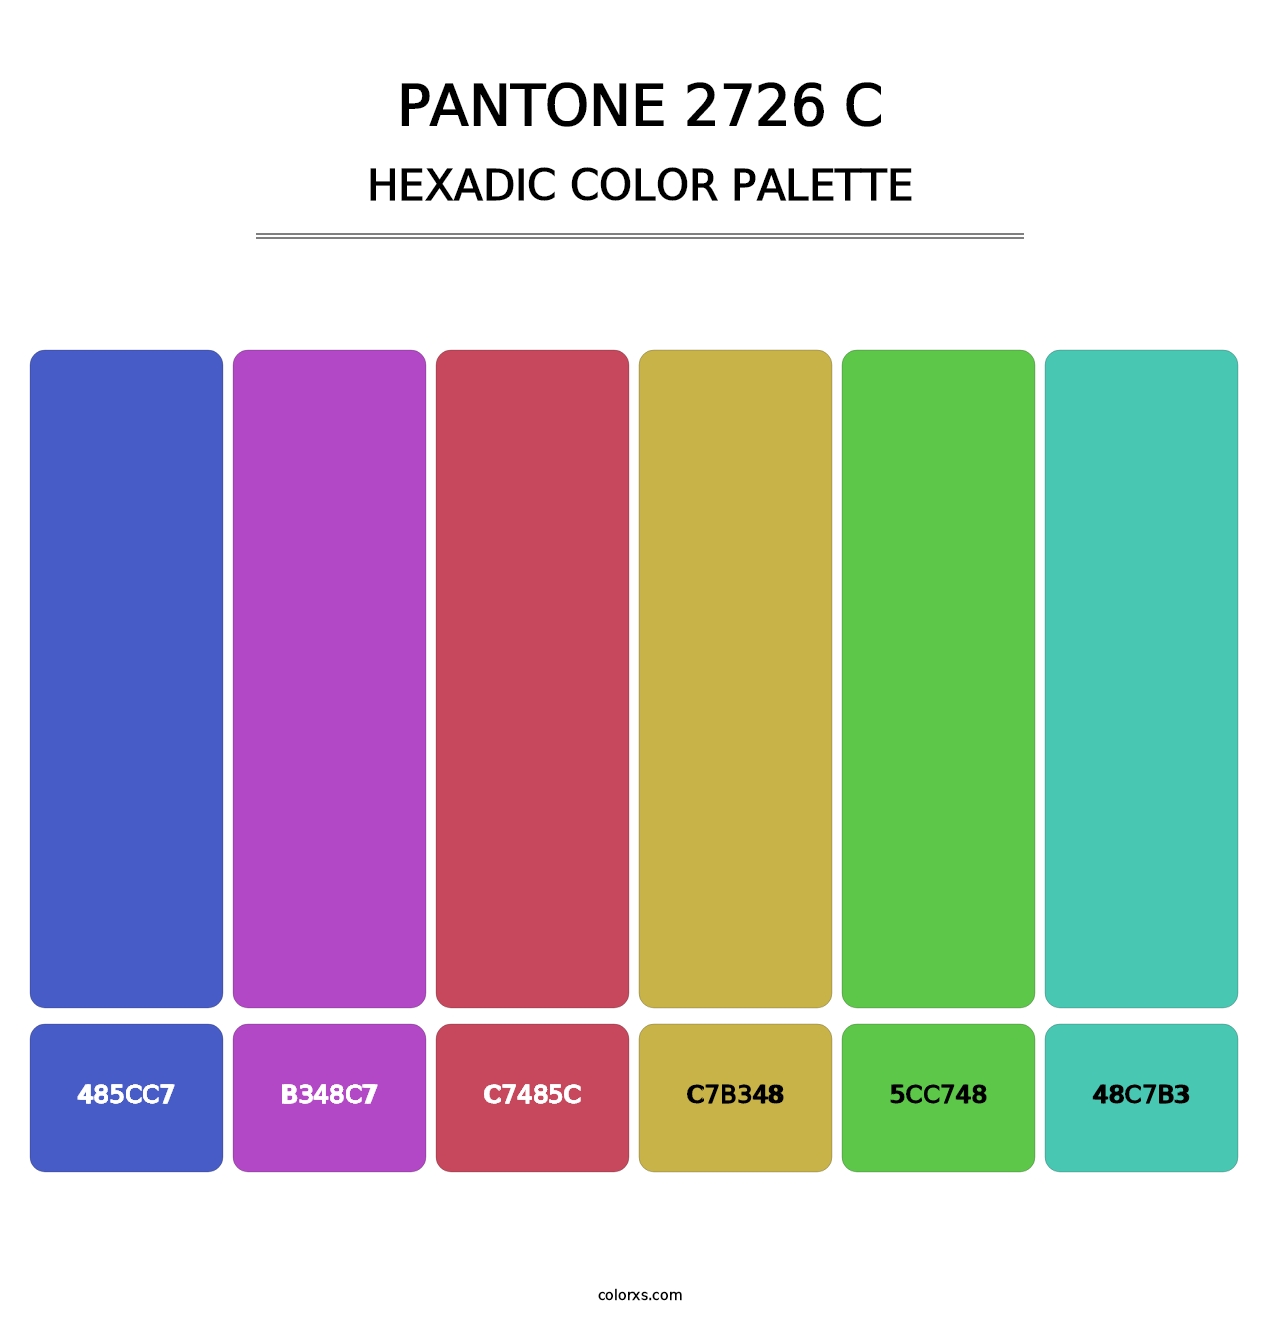 PANTONE 2726 C - Hexadic Color Palette